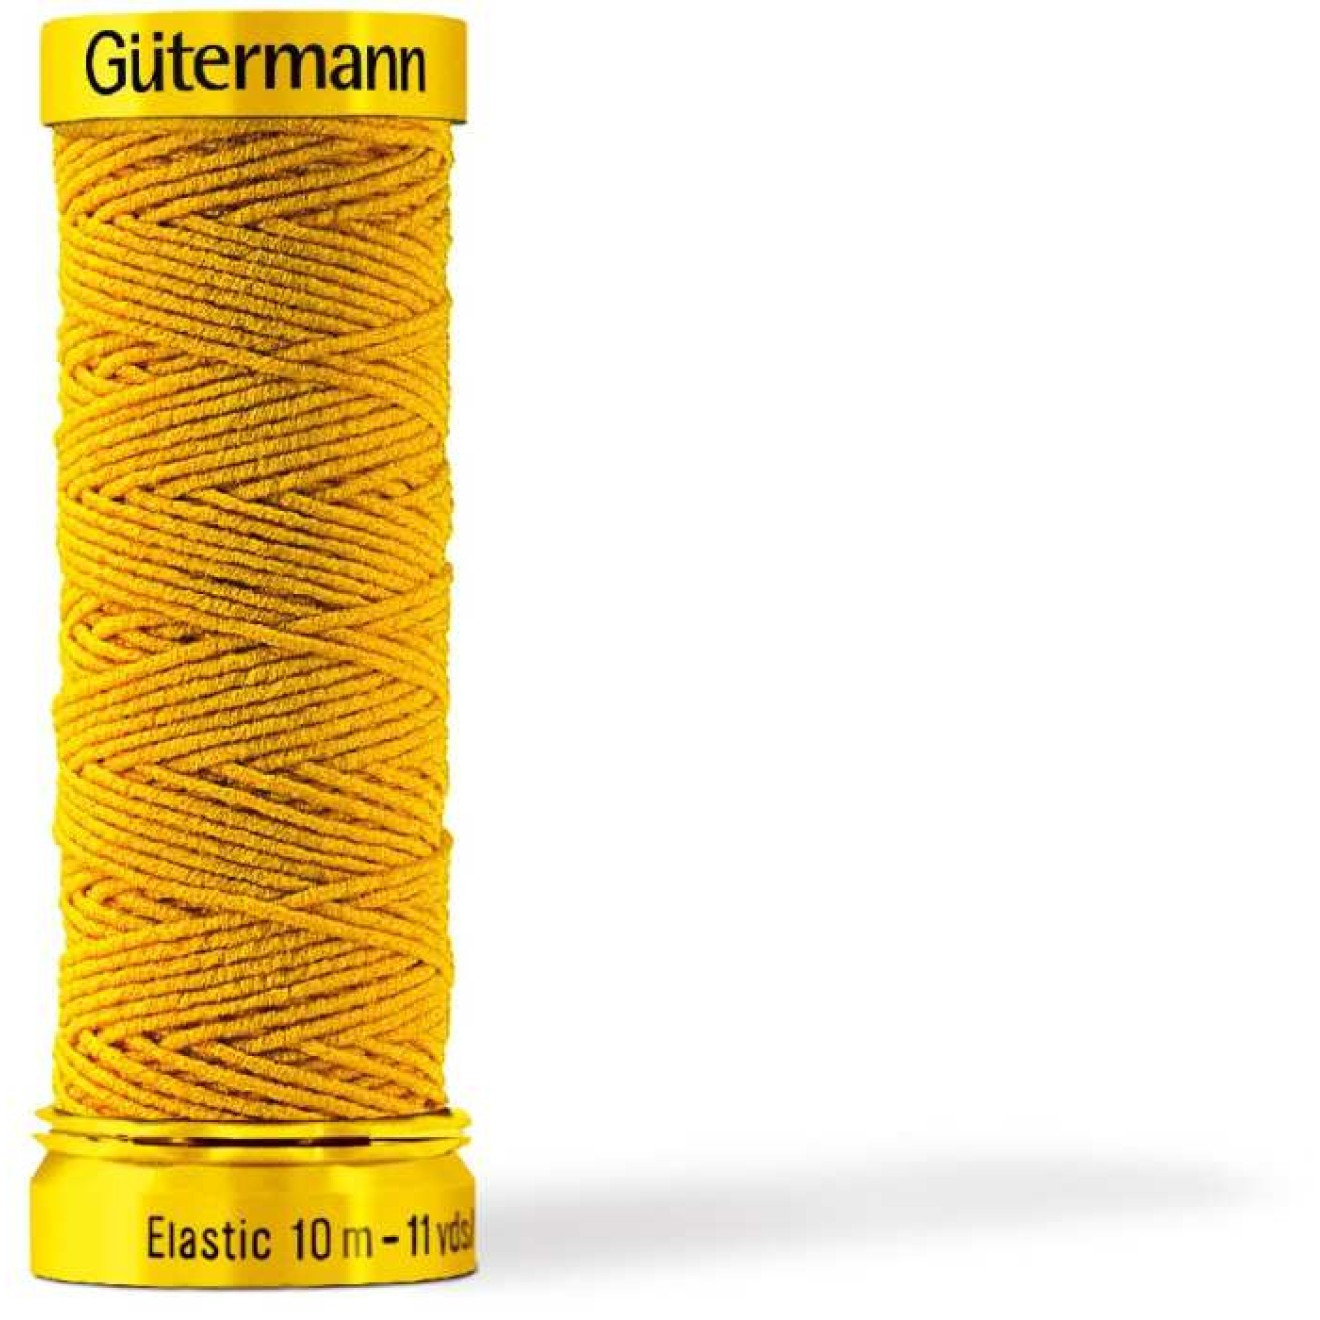 Gütermann Elasticfaden 10 m